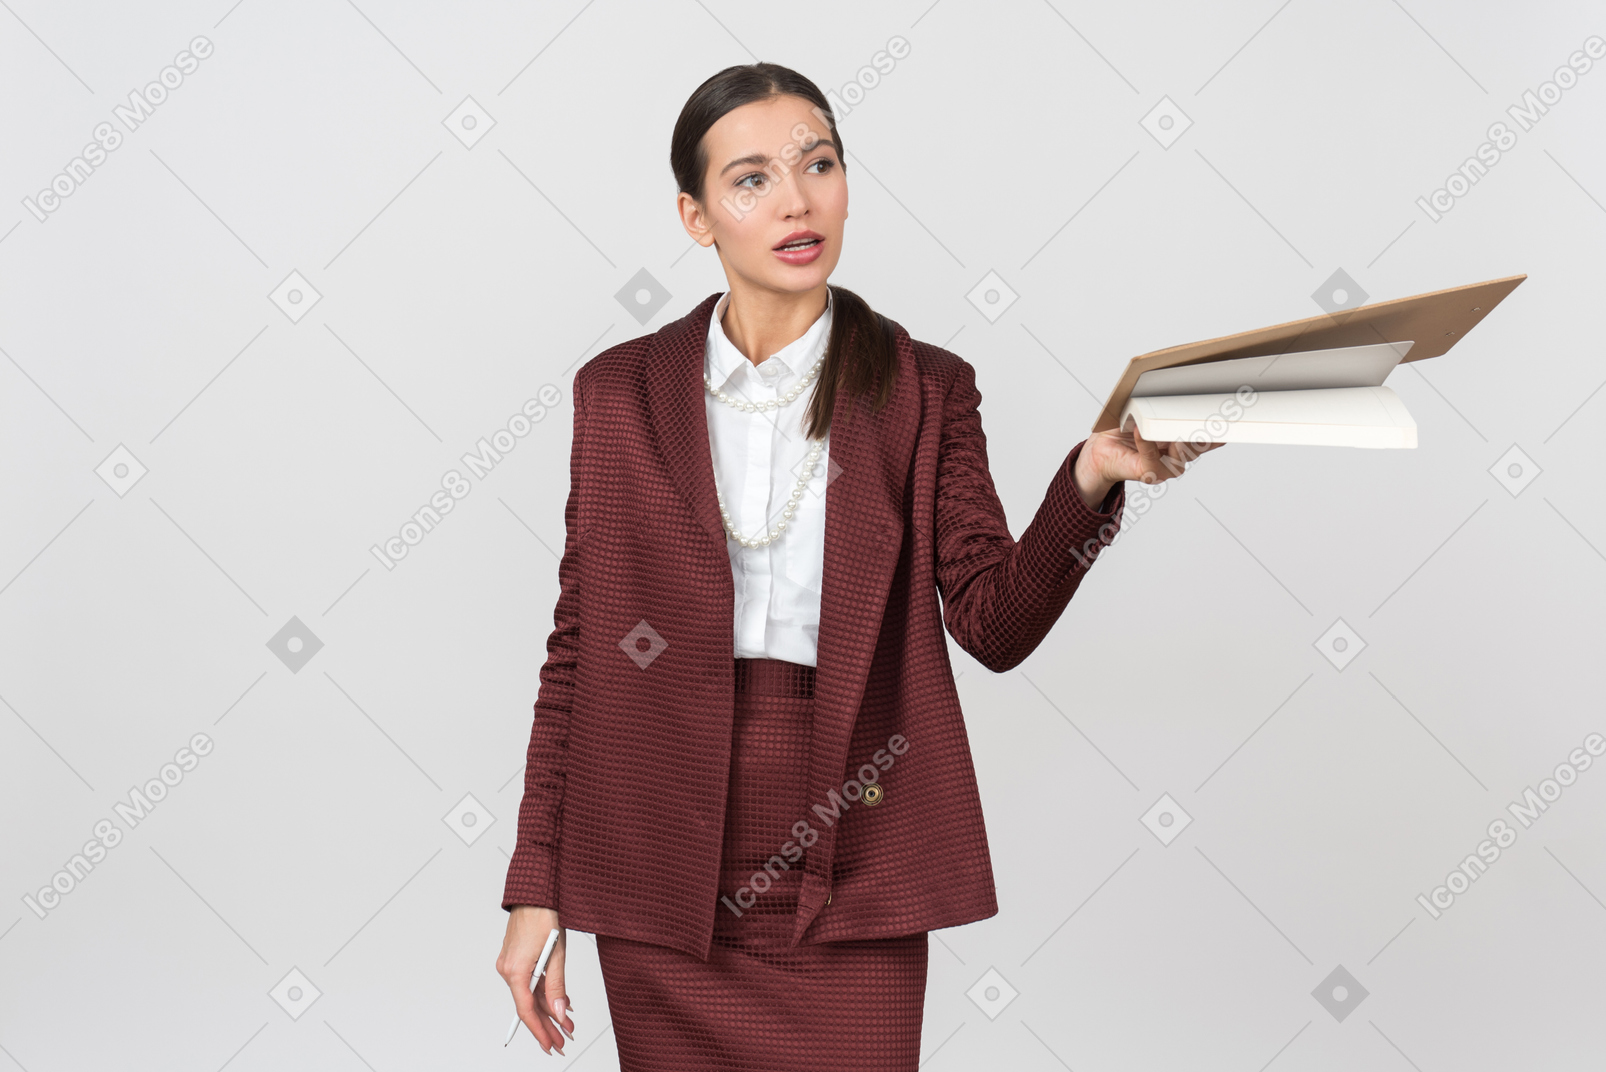 Atractiva mujer vestida formalmente sosteniendo un portapapeles